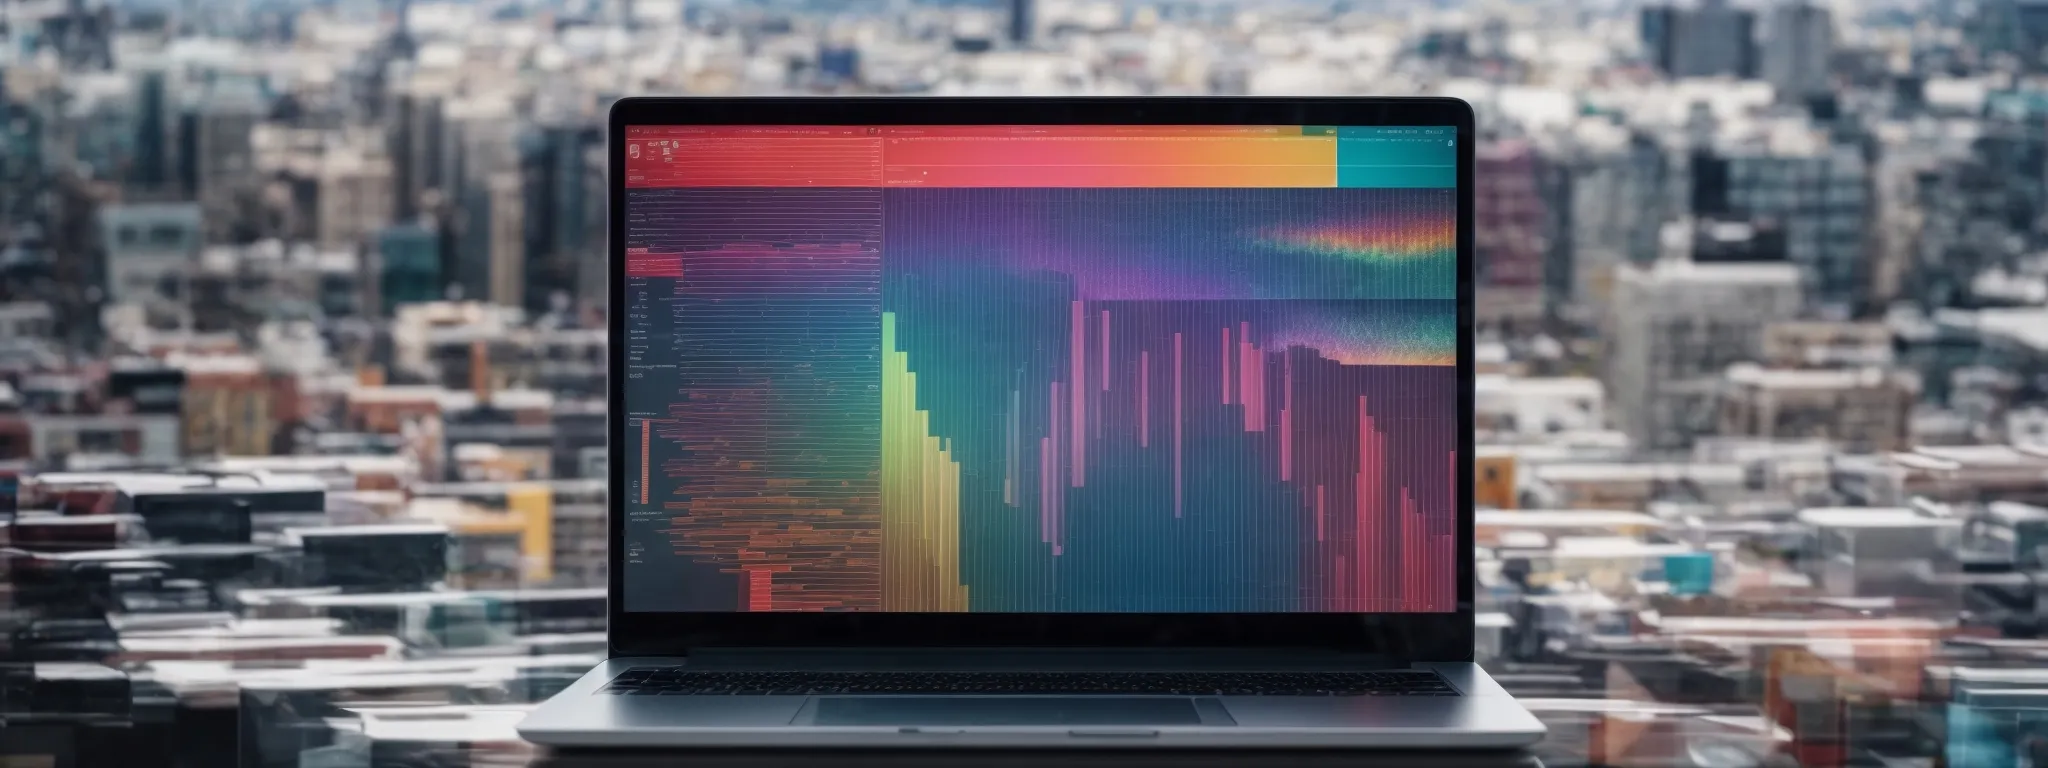 a laptop displaying an intricate, colorful data chart, symbolizing python's impact on data visualization.